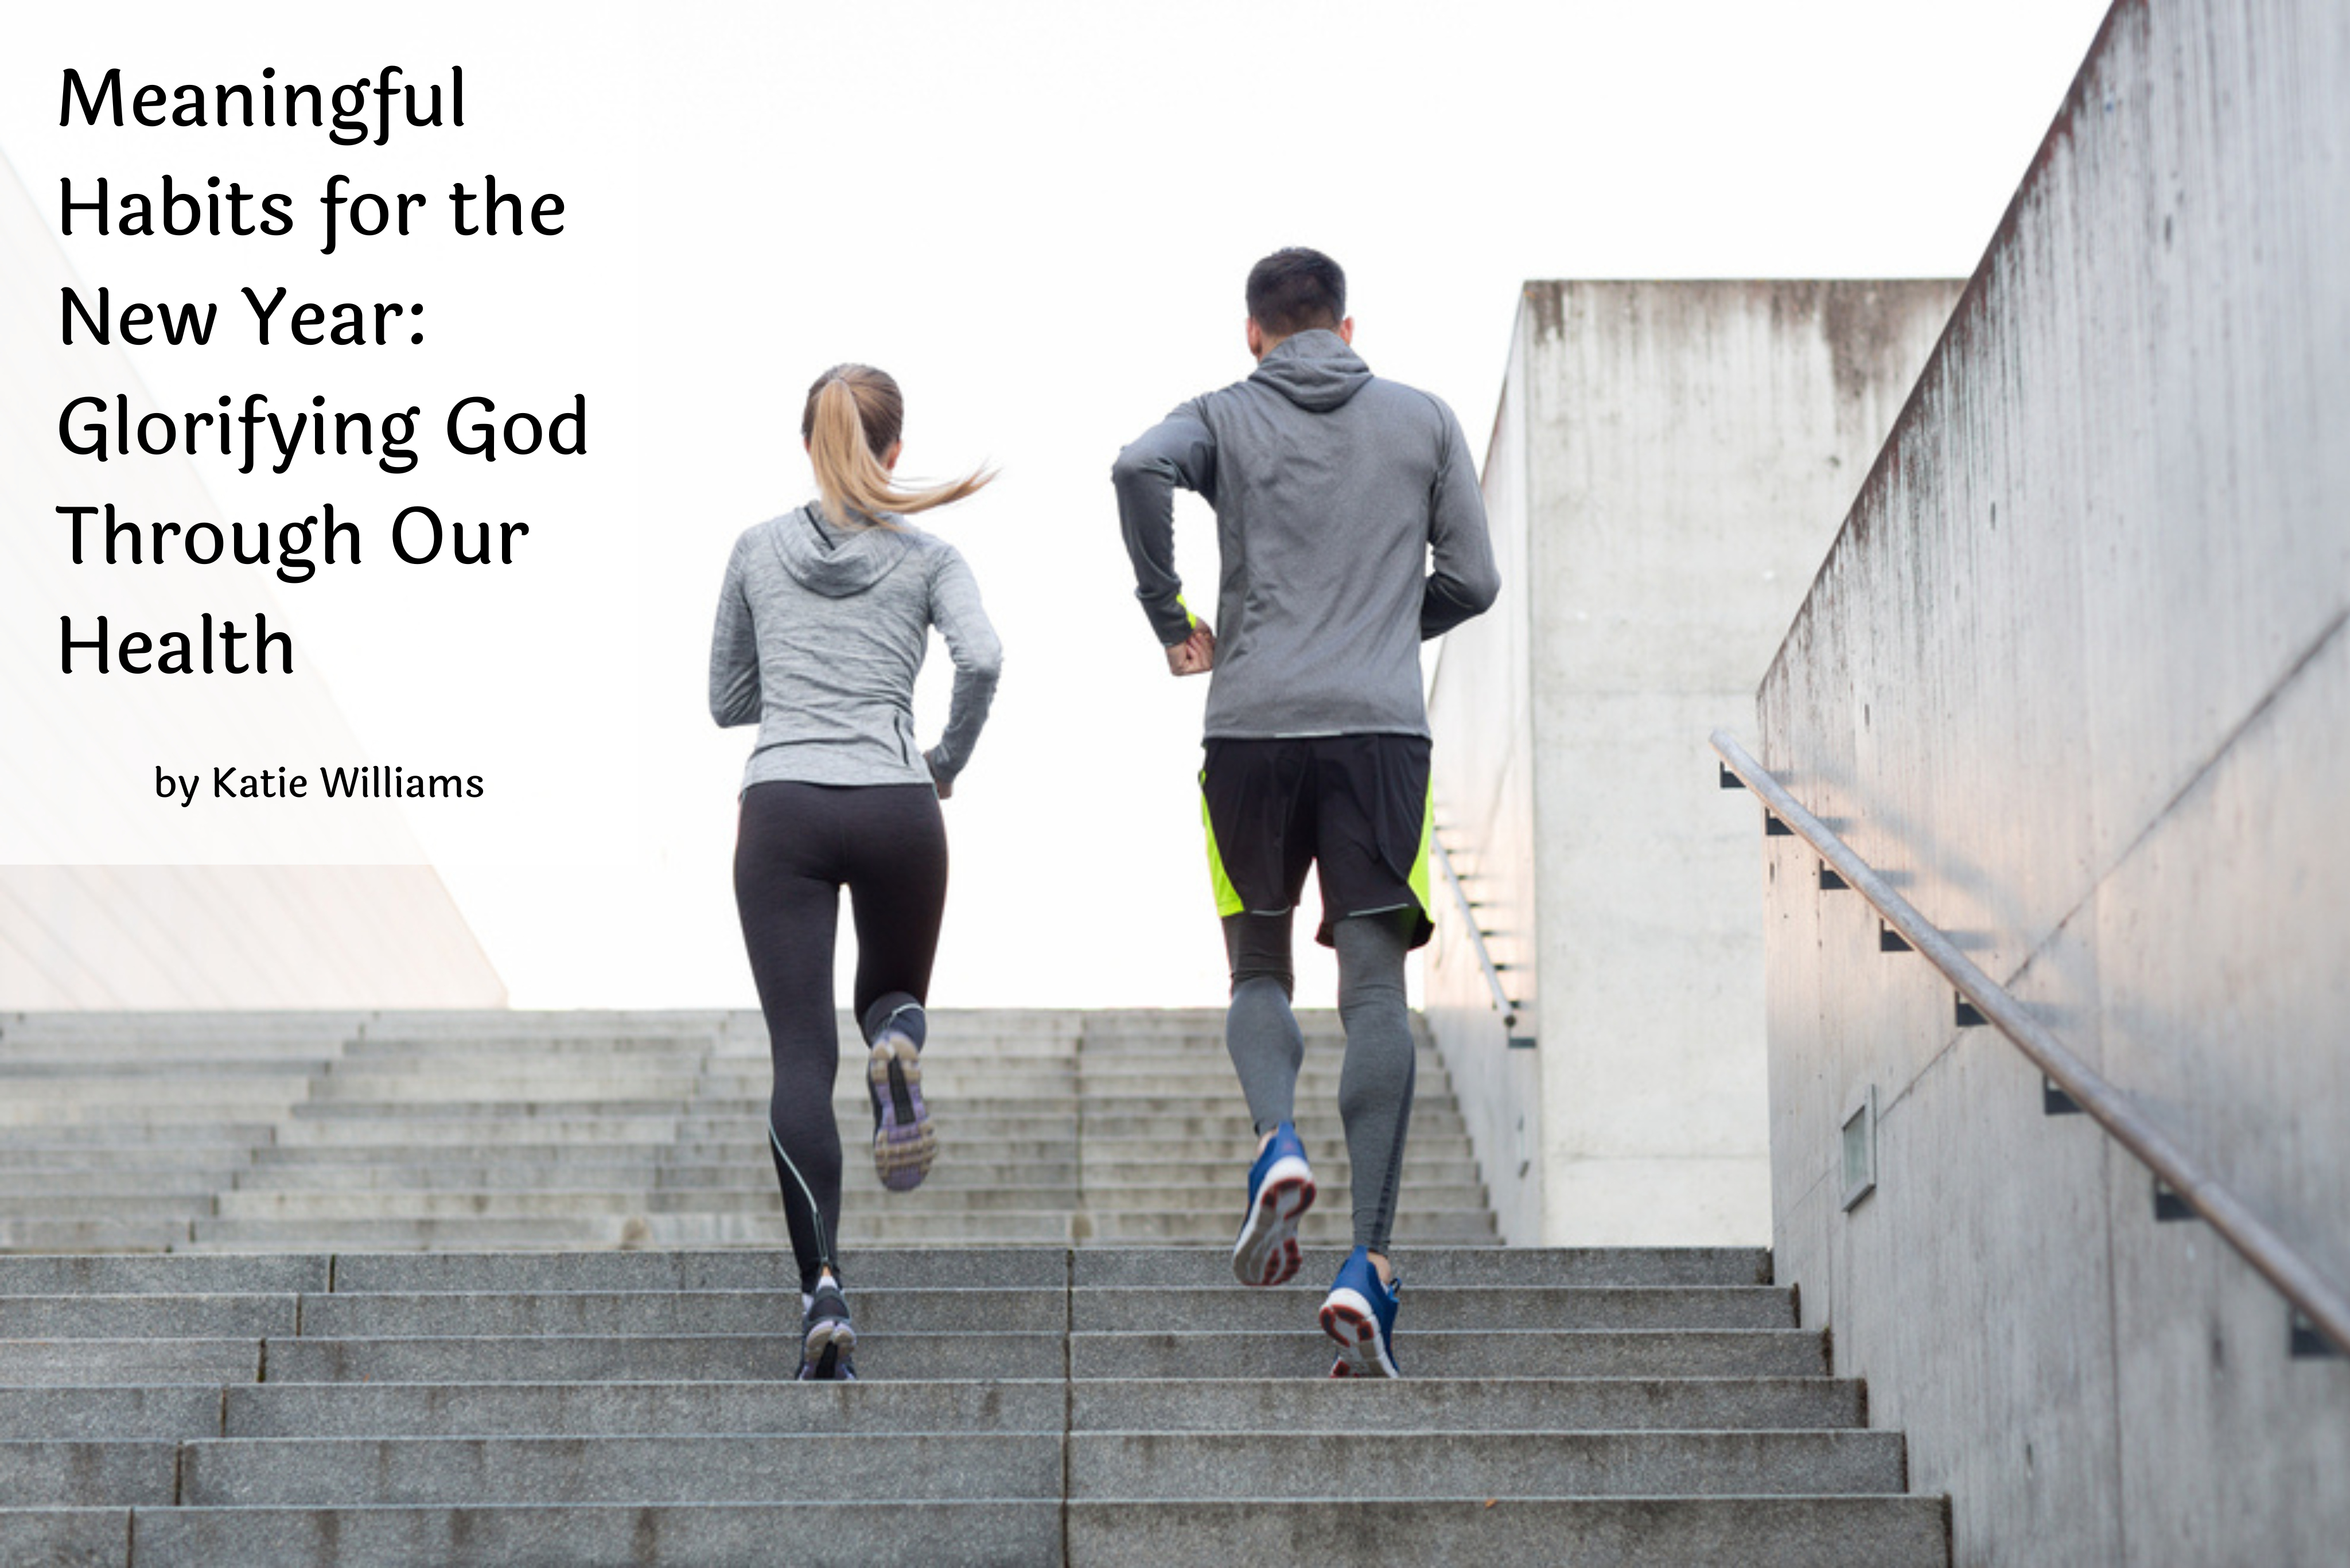 glorifying-God-through-our-health